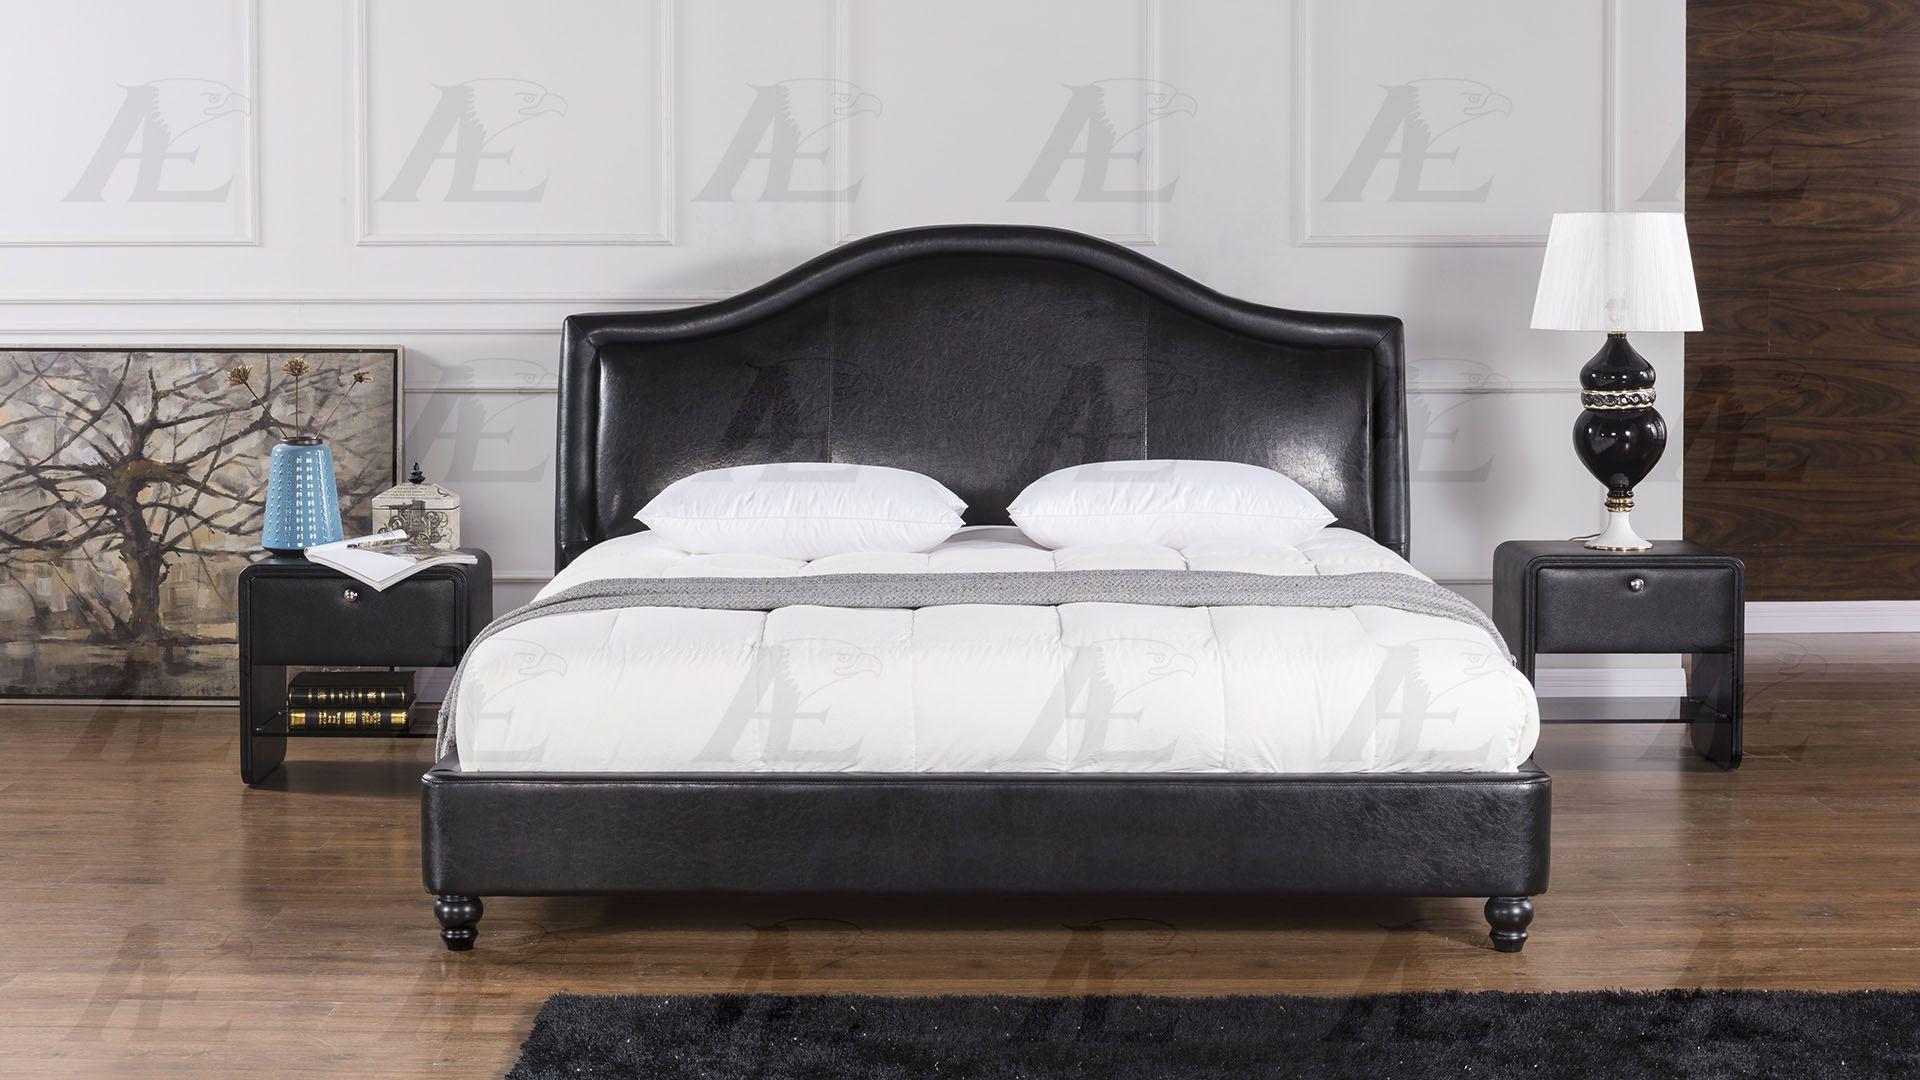 

    
AE B-D059-Q American Eagle Furniture Platform Bed
